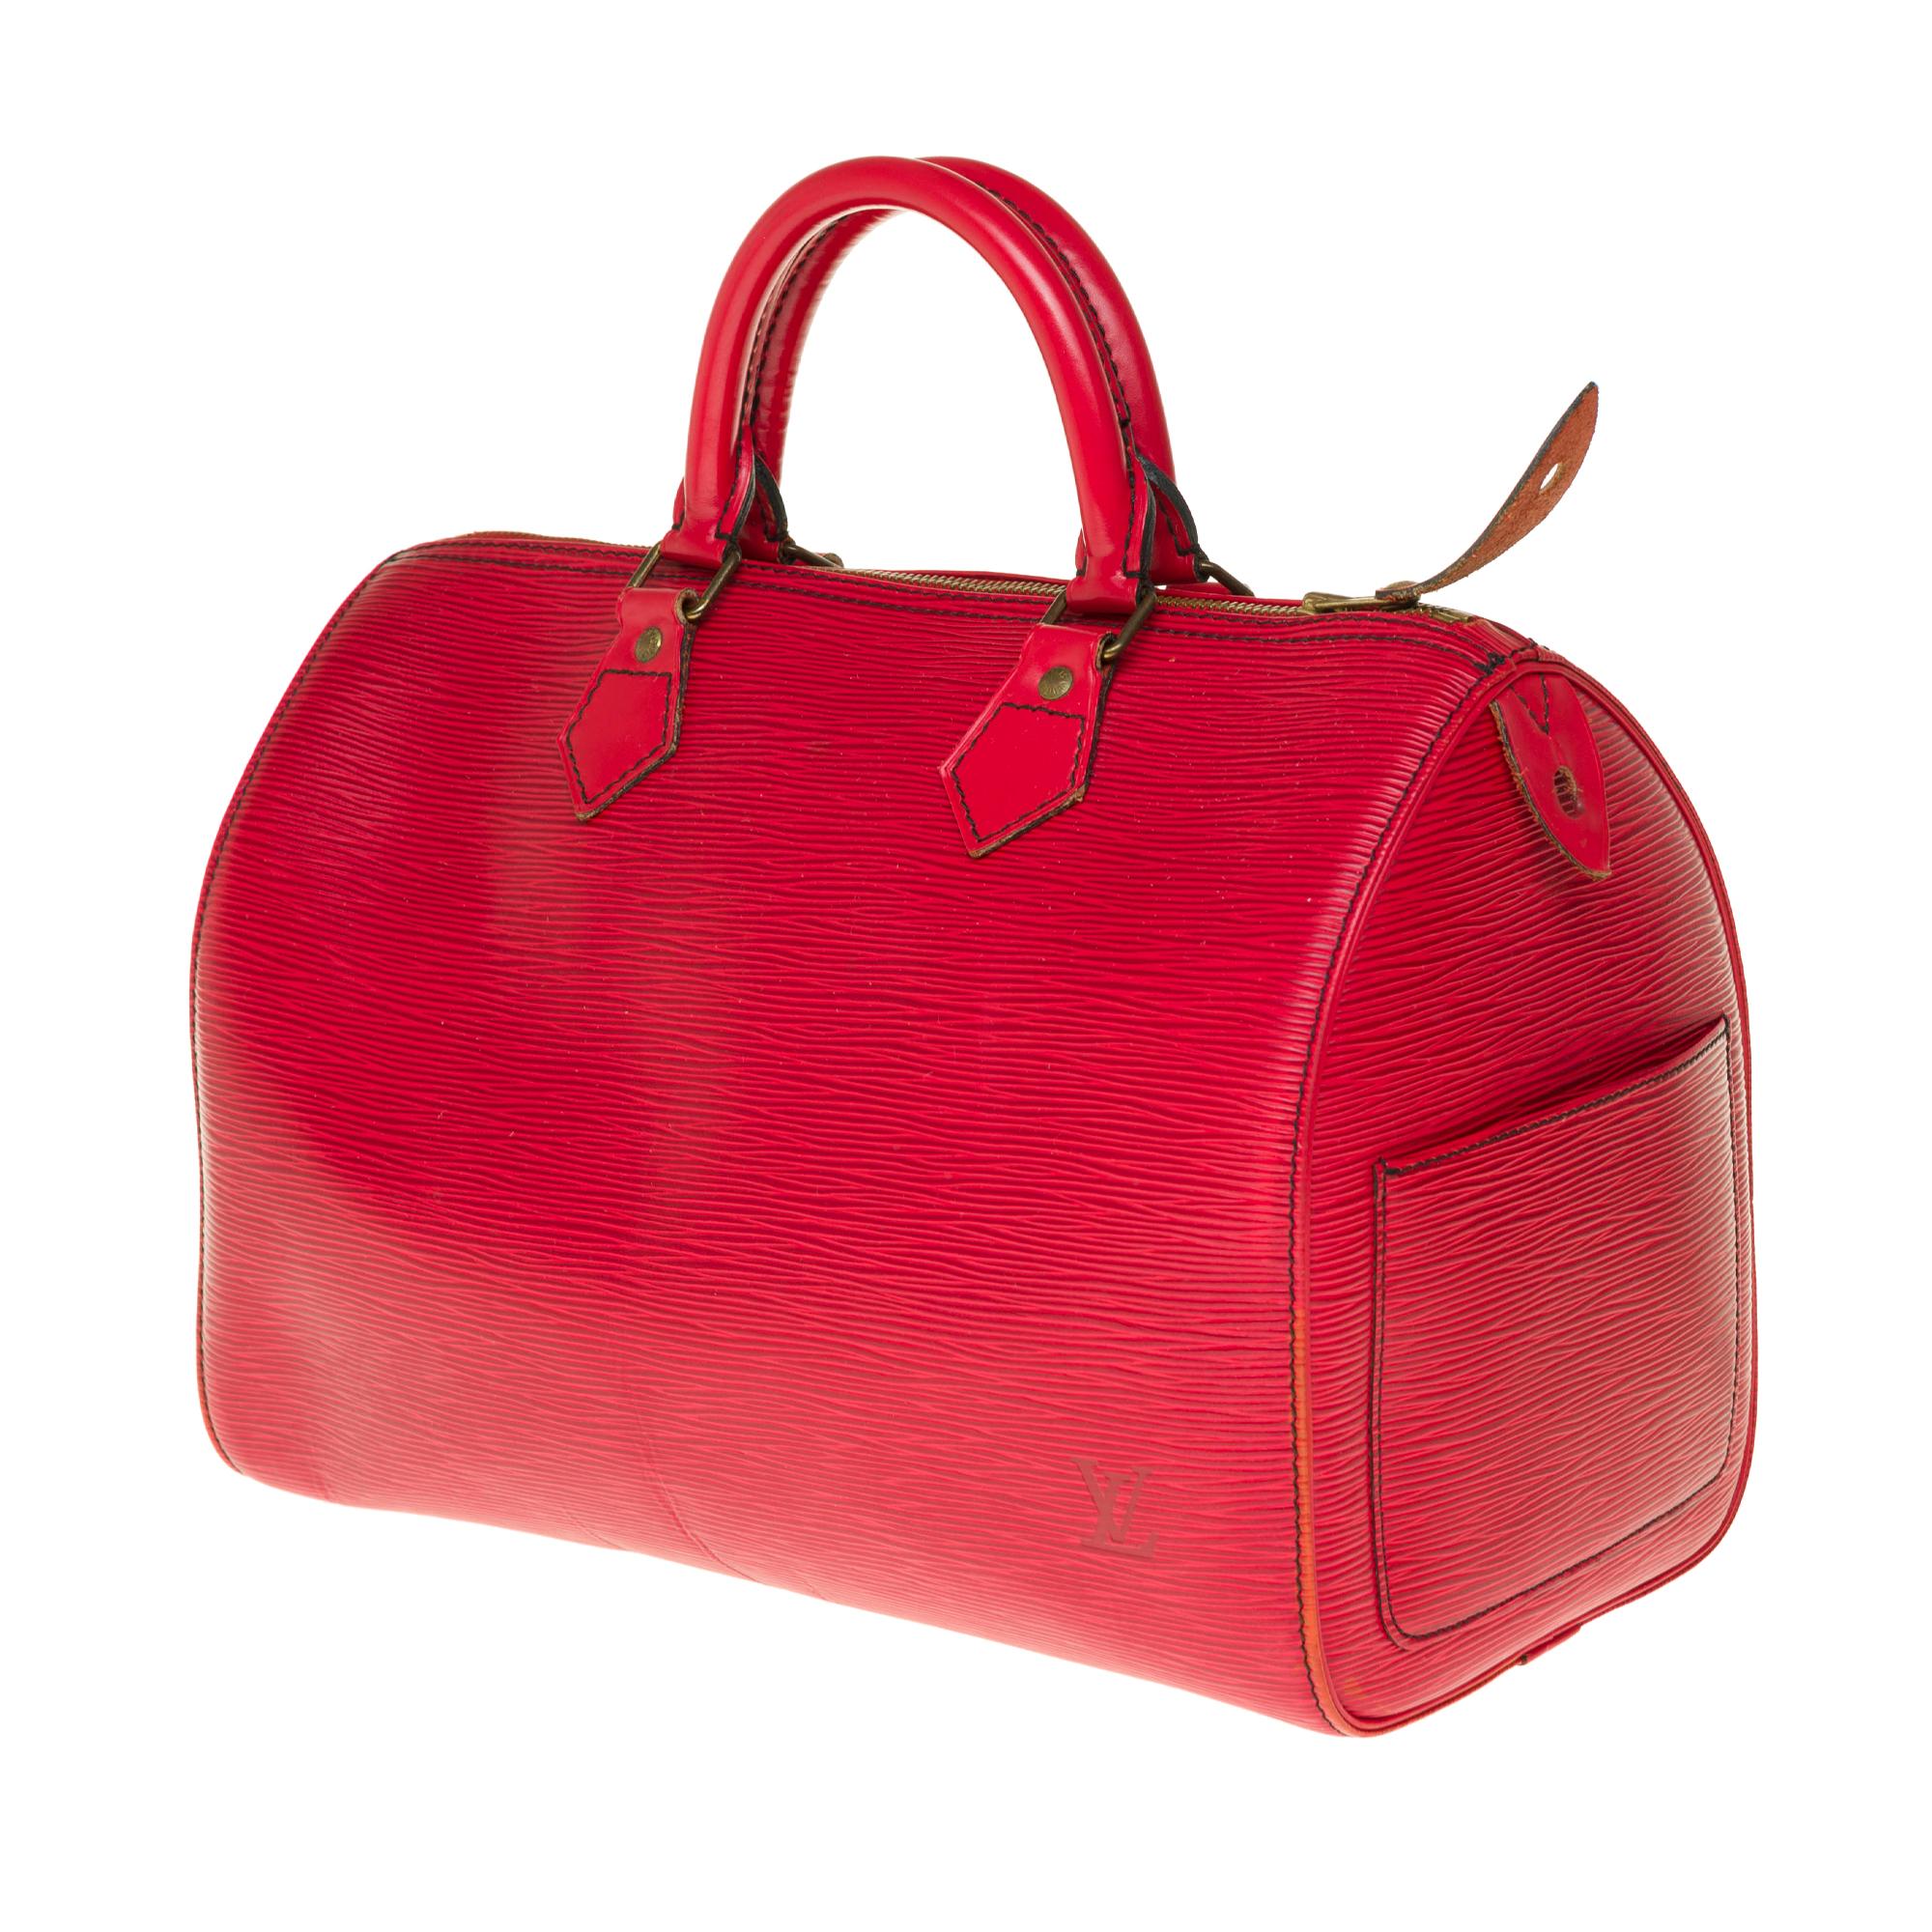 Louis Vuitton Speedy 35 handbag in red épi leather In Good Condition In Paris, IDF